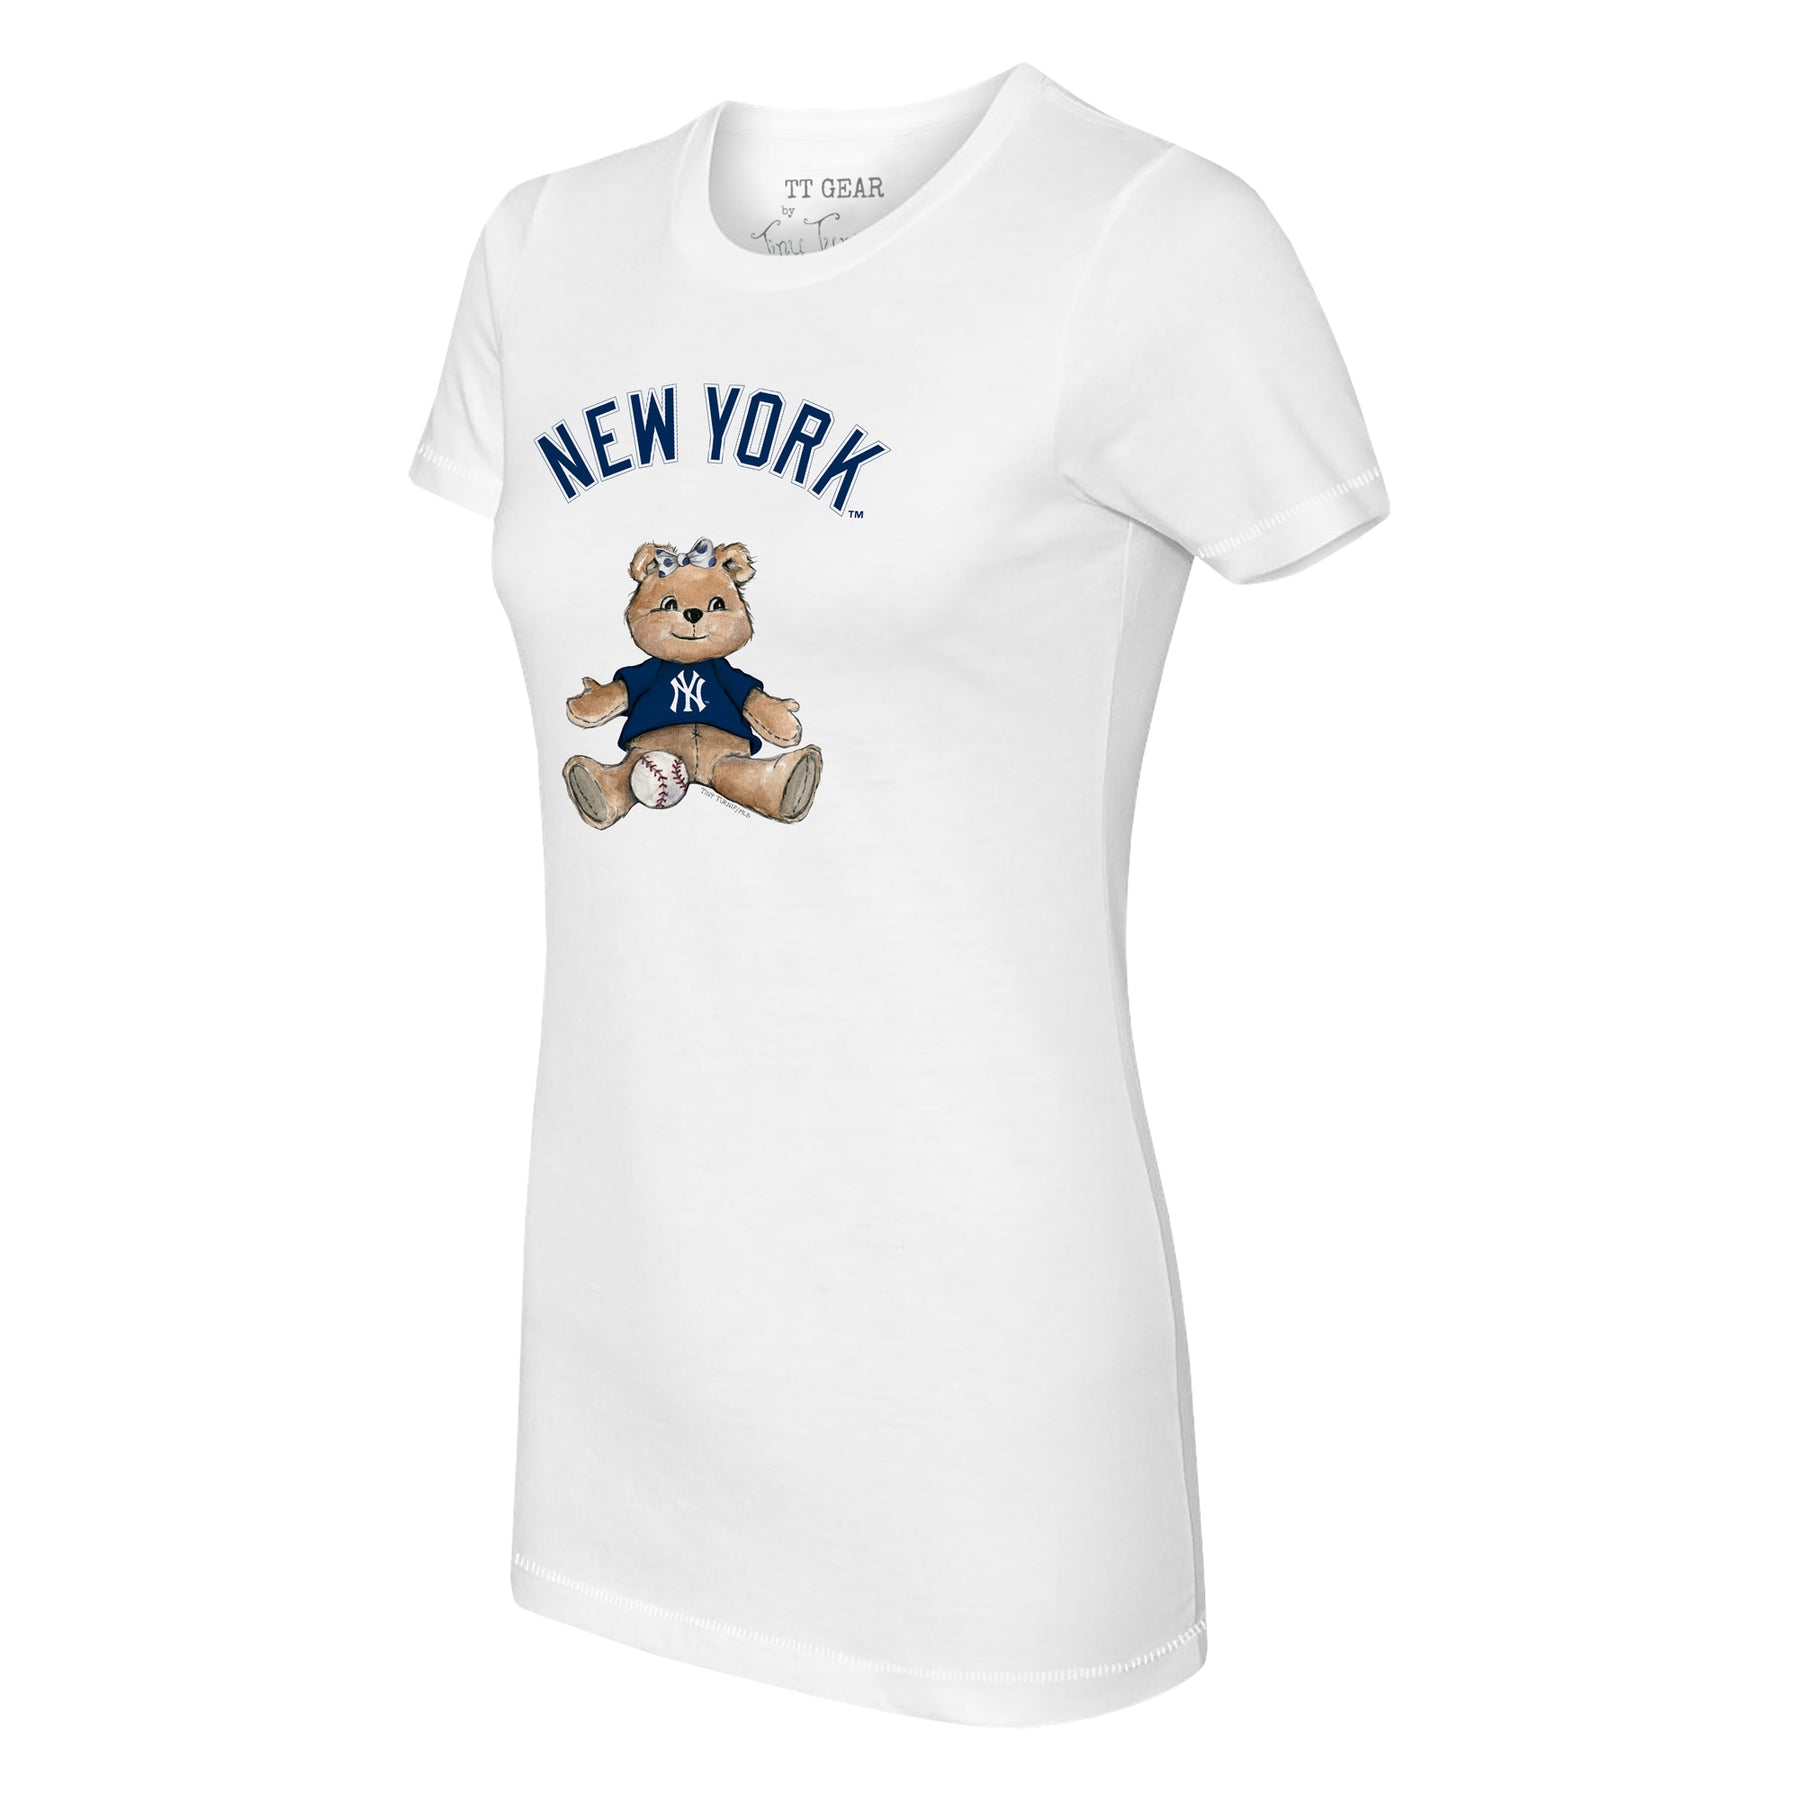 Fanatics Men's New York Yankees Navy Aaron Judge Yankees for Life T-Shirt